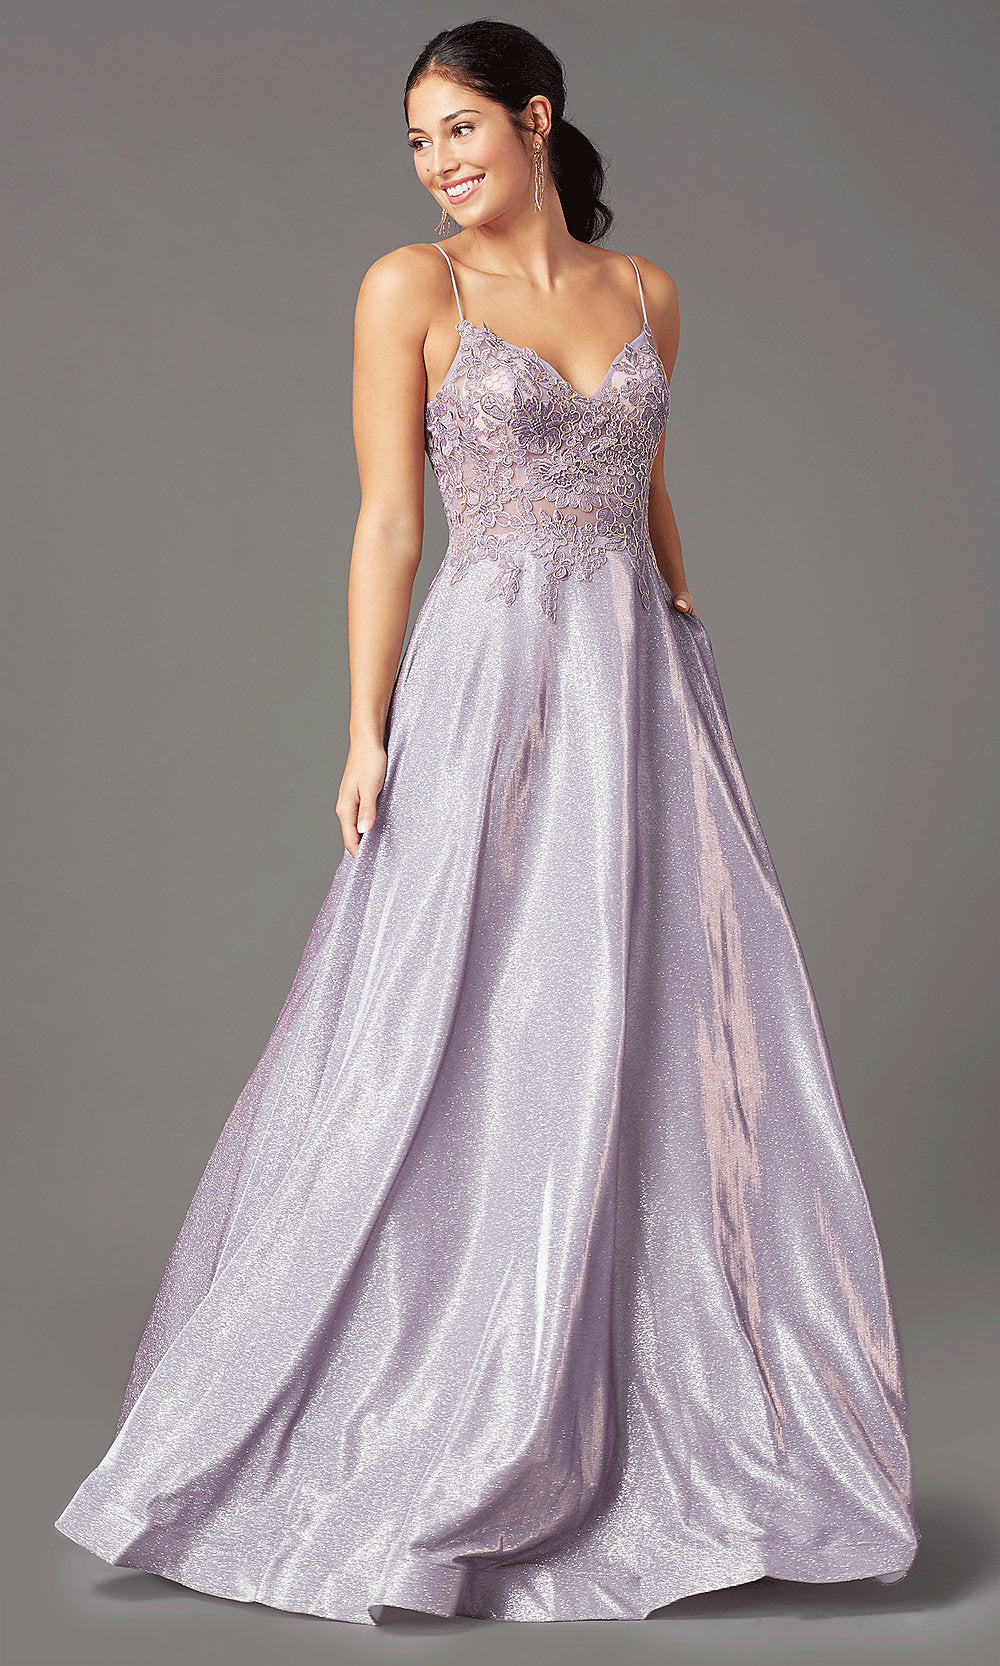 Metallic Purple Glitter-Knit Lace-Bodice Prom Dress by PromGirl